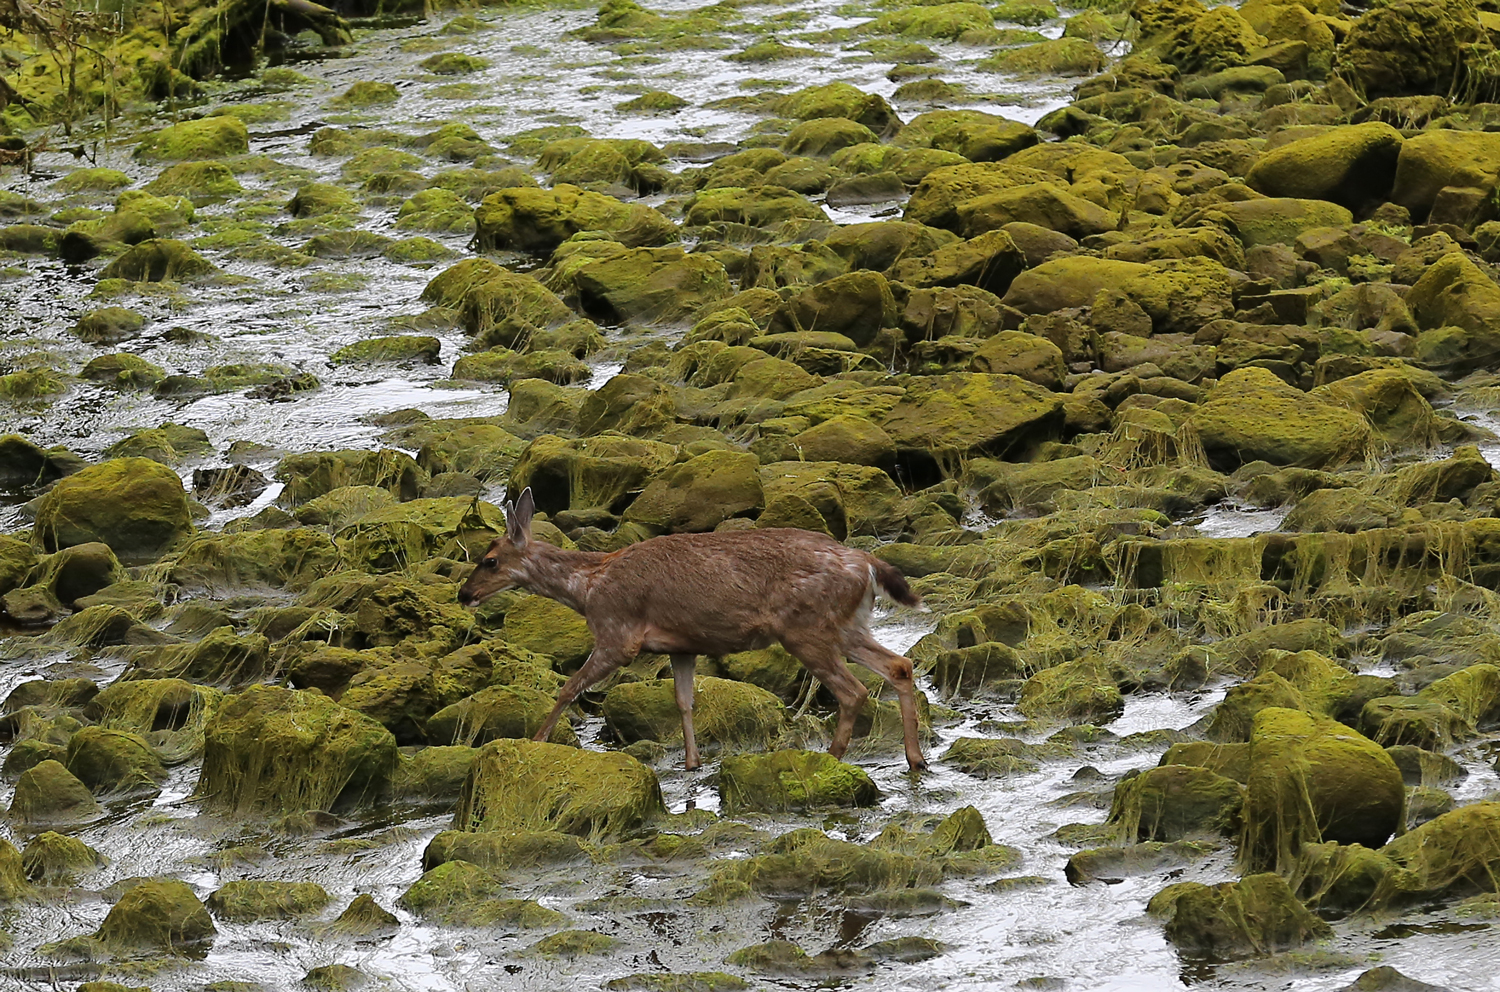 Sitka blacktail doe in Southeast Alaska walking through slimy seaweed